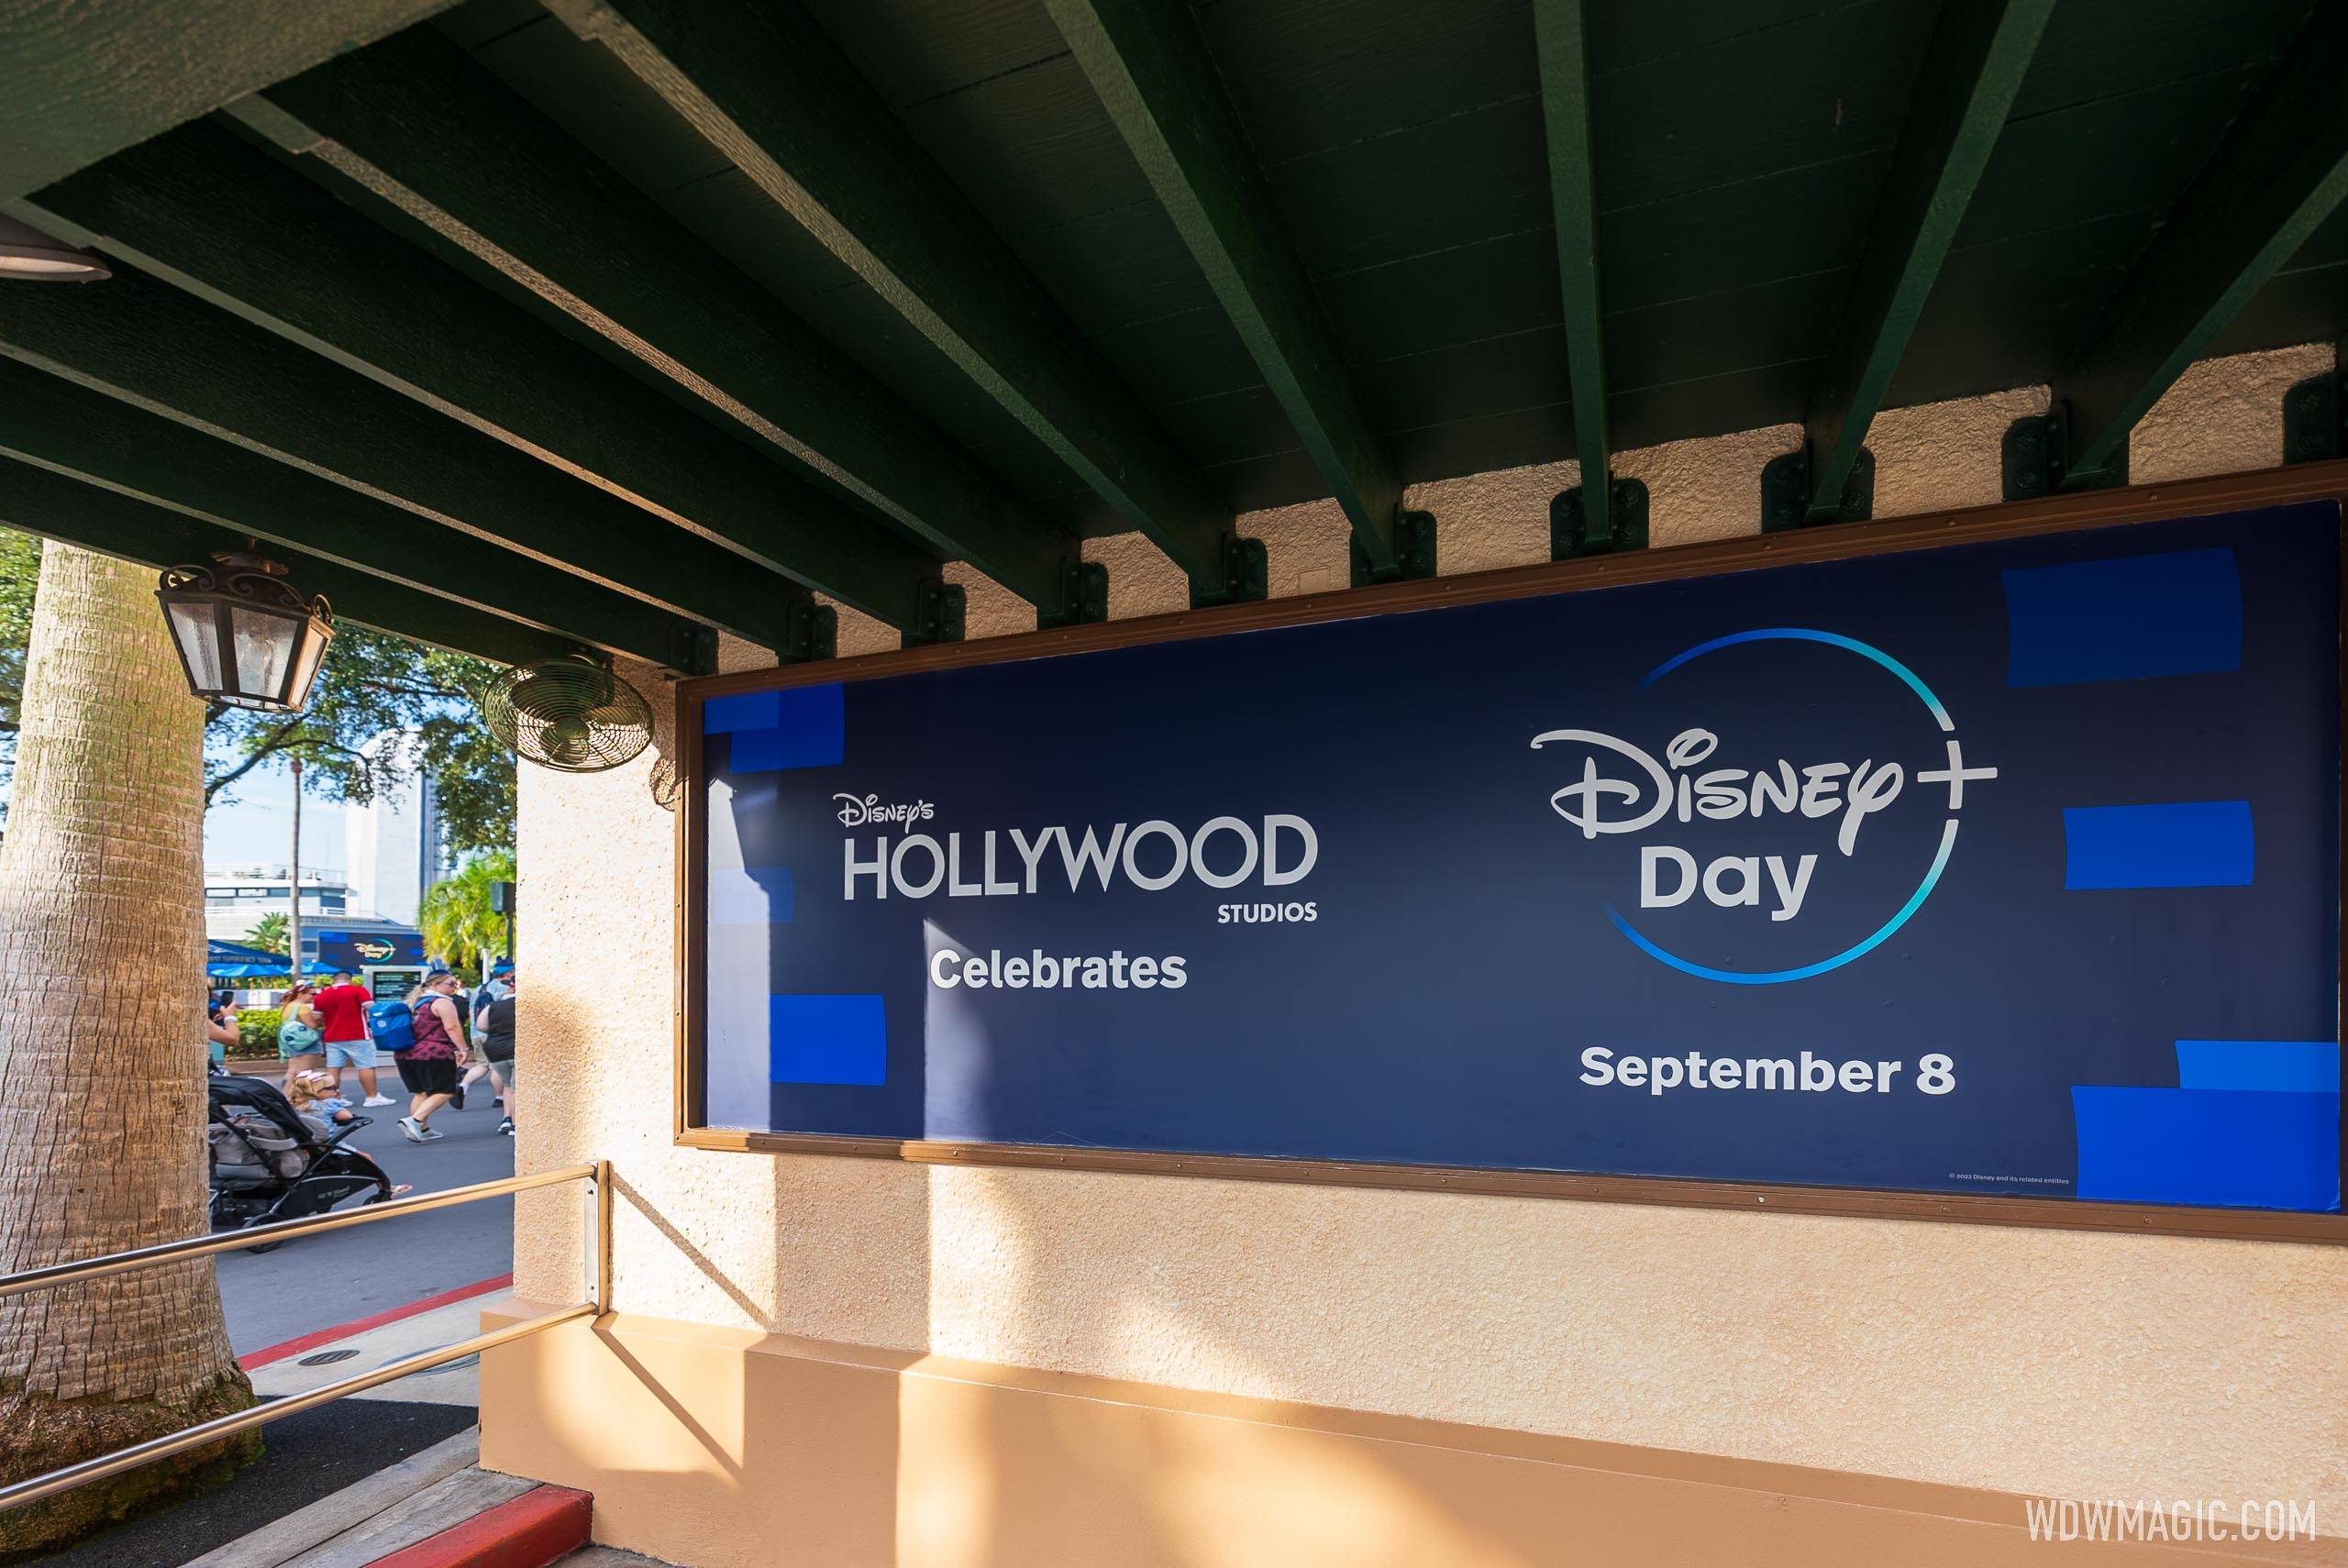 Disney+ Day 2022 at Disney's Hollywood Studios